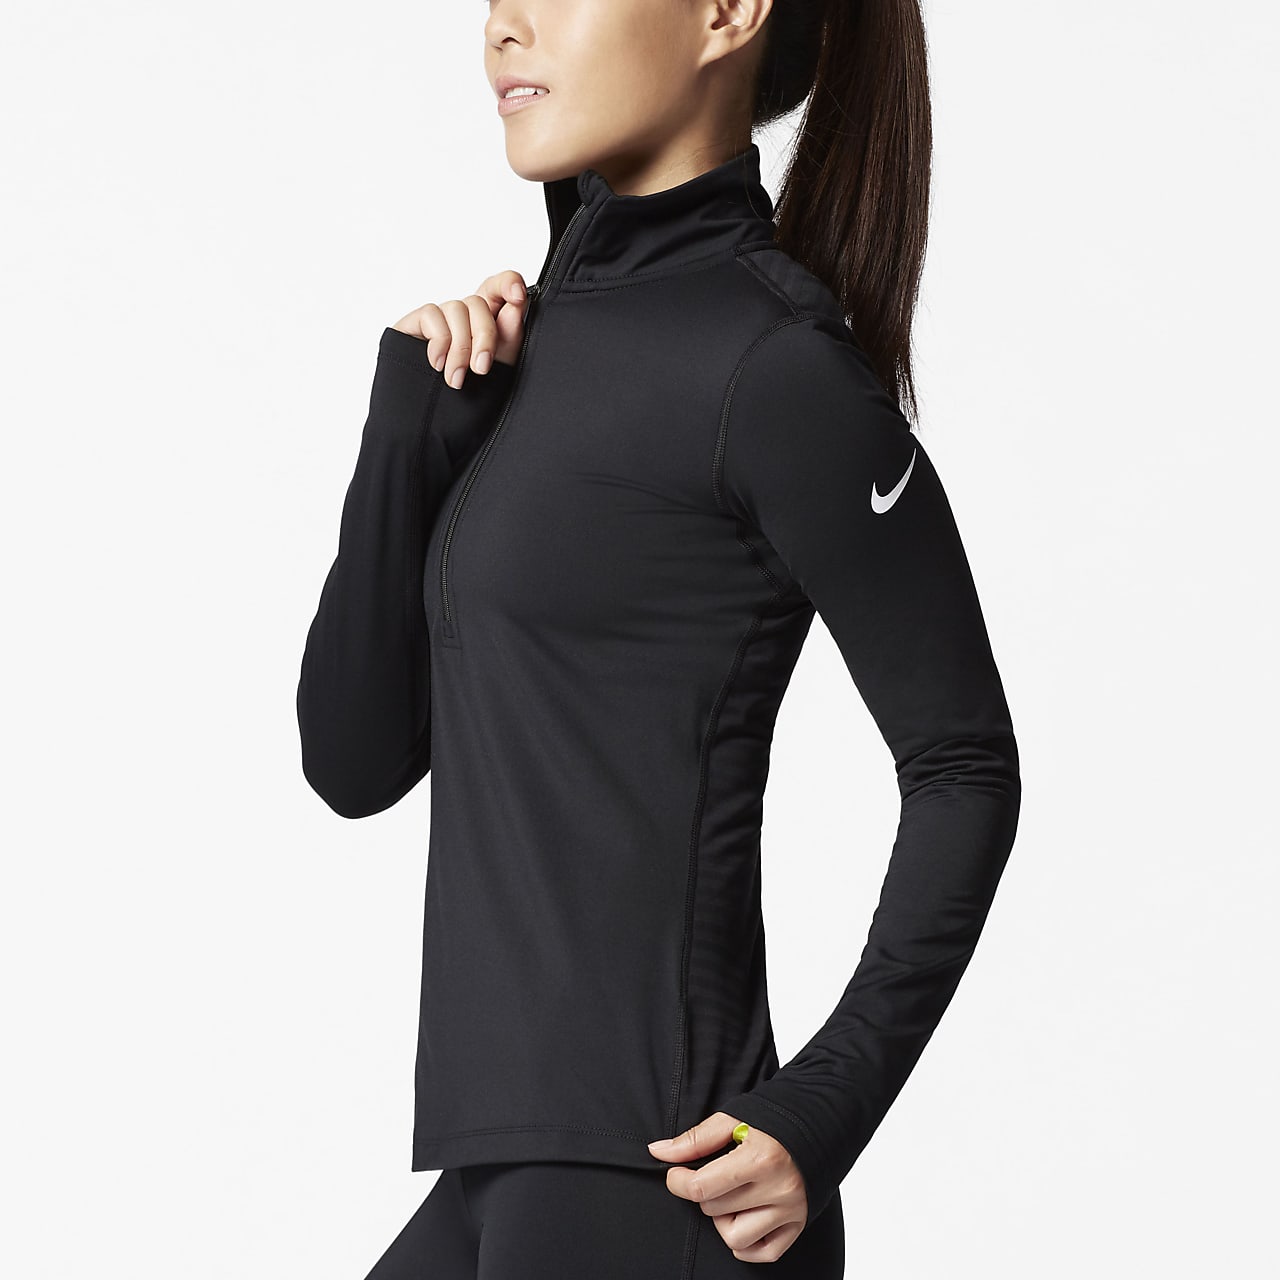 Nike Warm Women's Top. ID